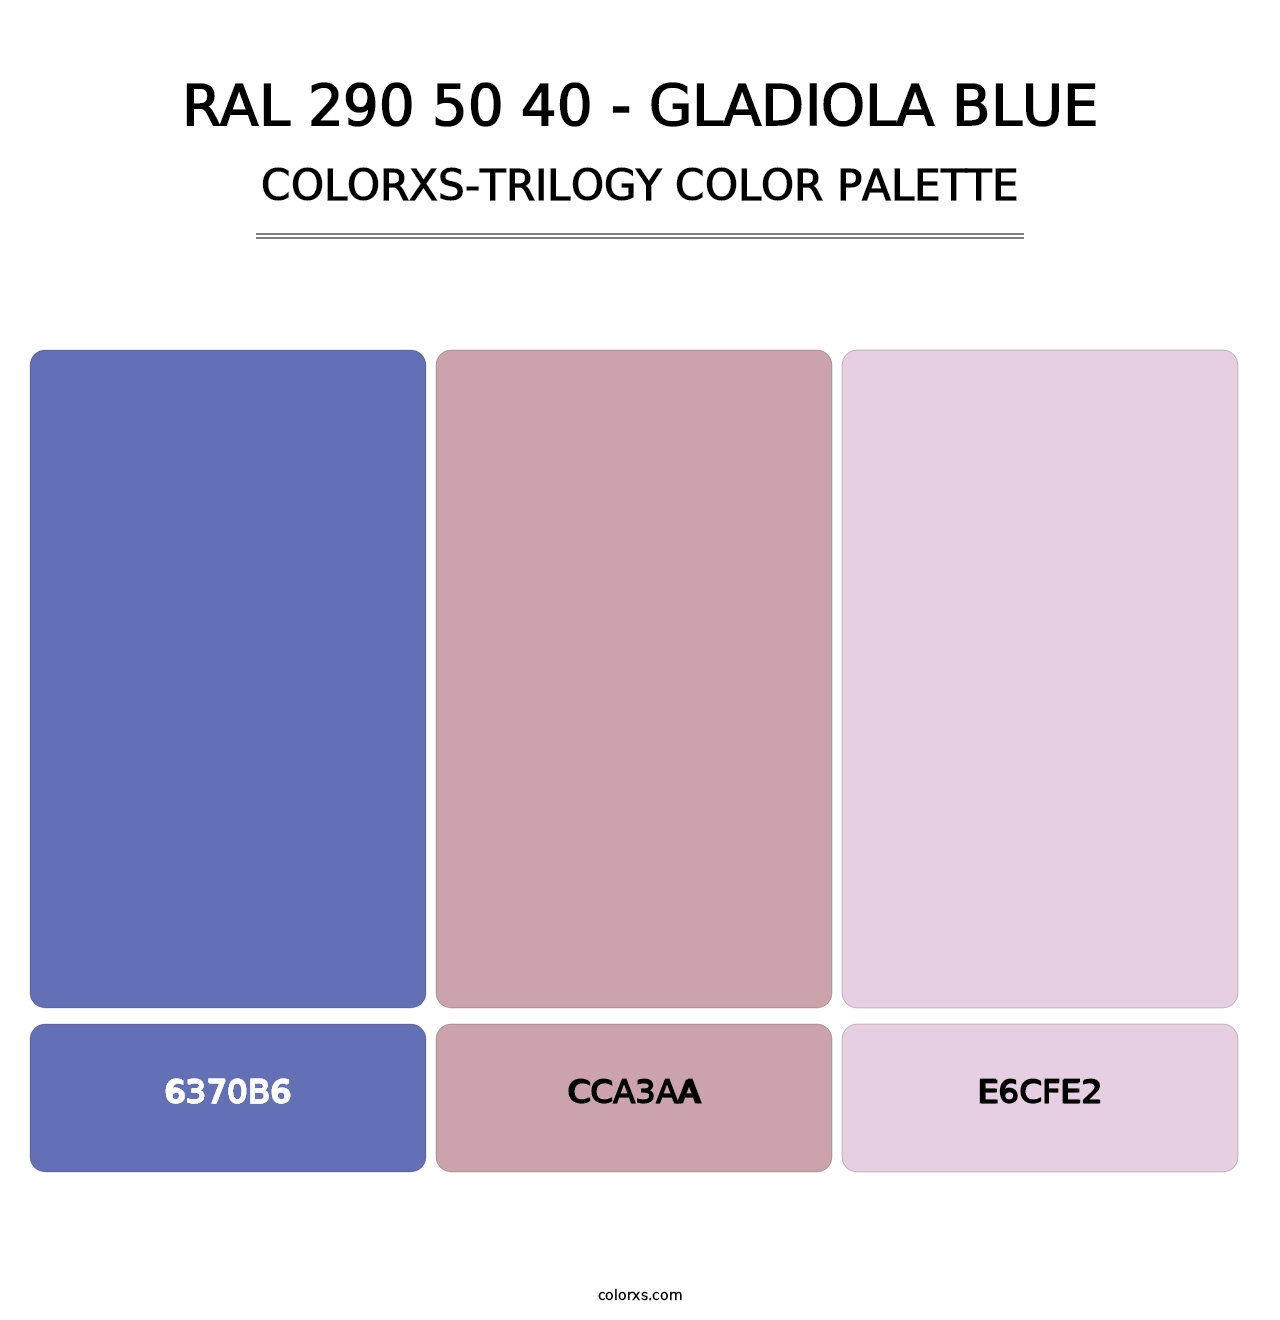 RAL 290 50 40 - Gladiola Blue - Colorxs Trilogy Palette